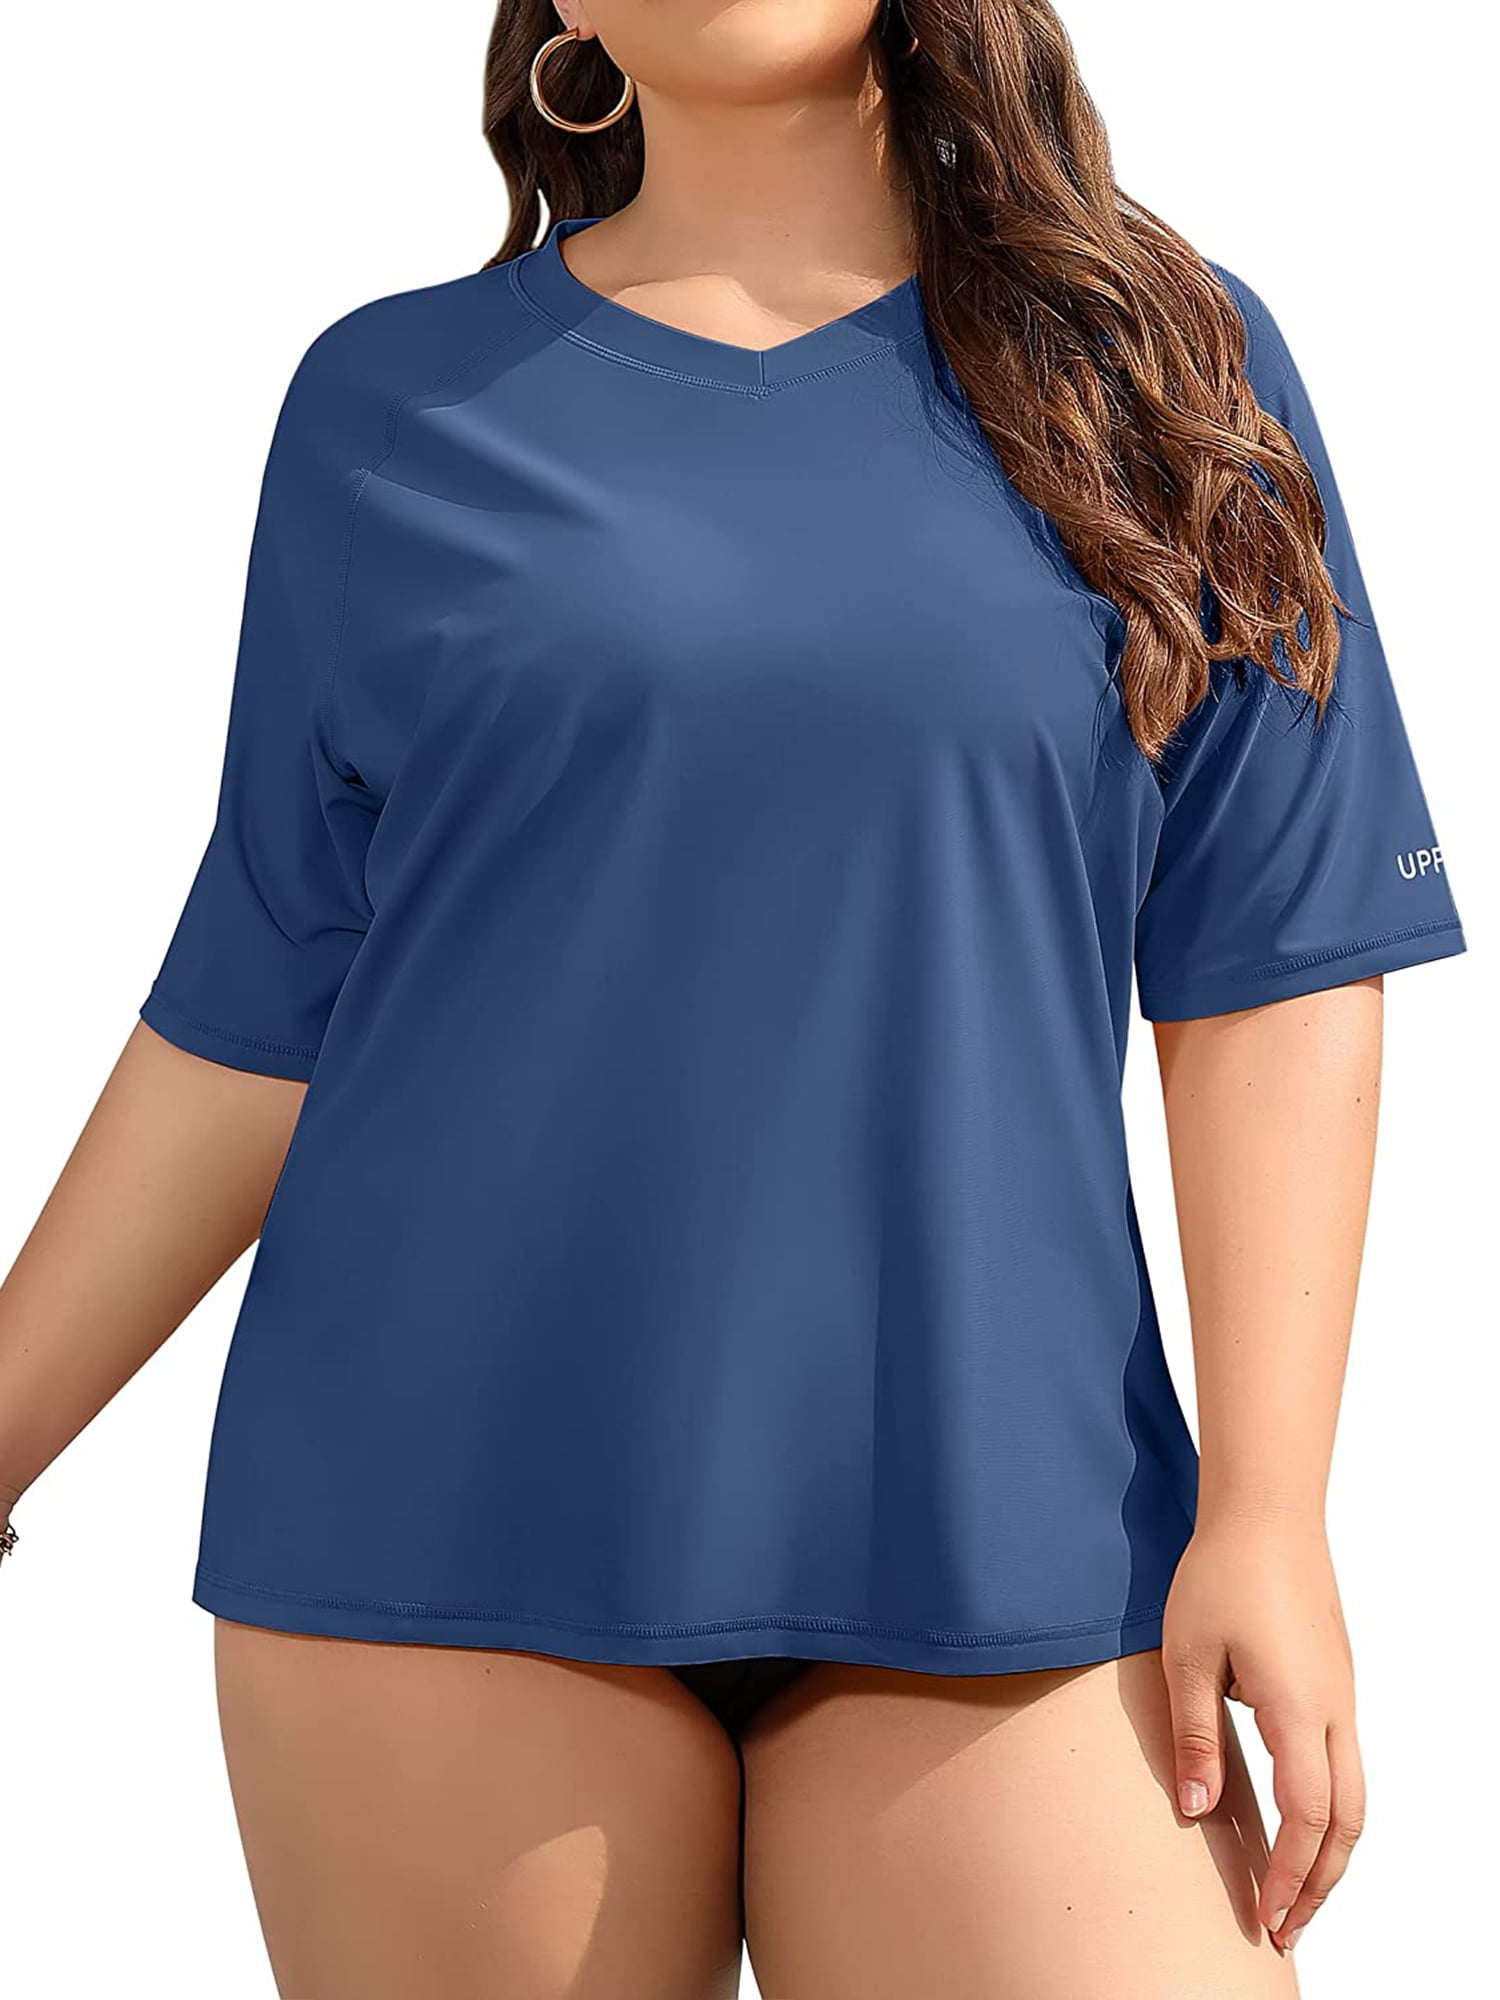 Women's V Neck Plus Size Rash Guard Stretchy Solid Swim Shirt UPF 50+  Swimwear Tops 